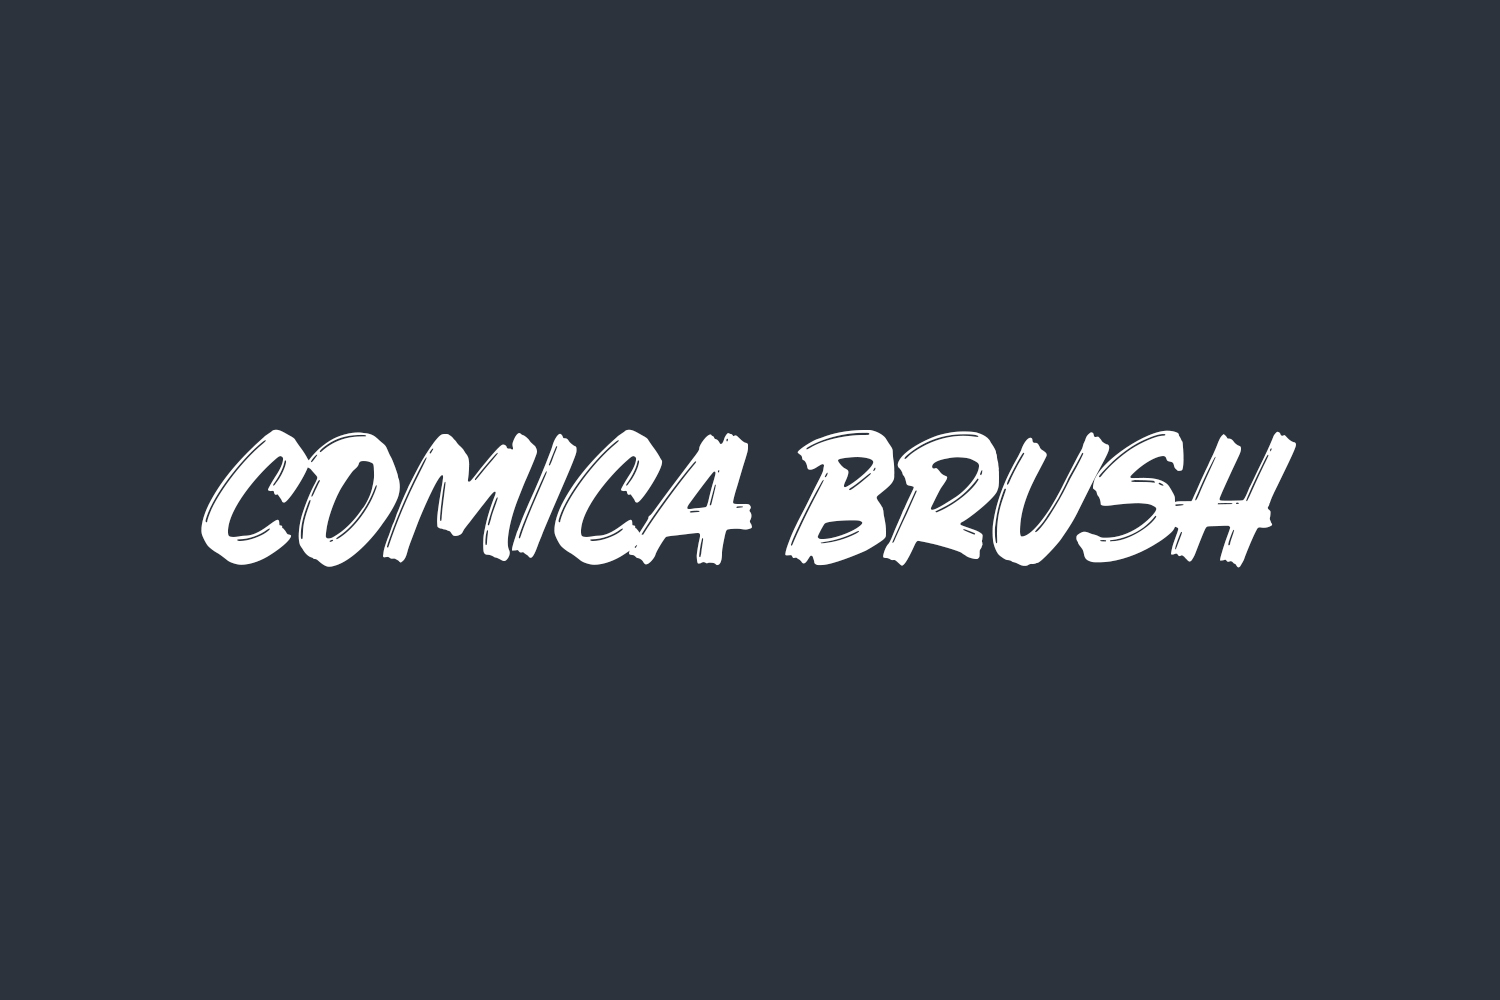 Comica Brush Free Font